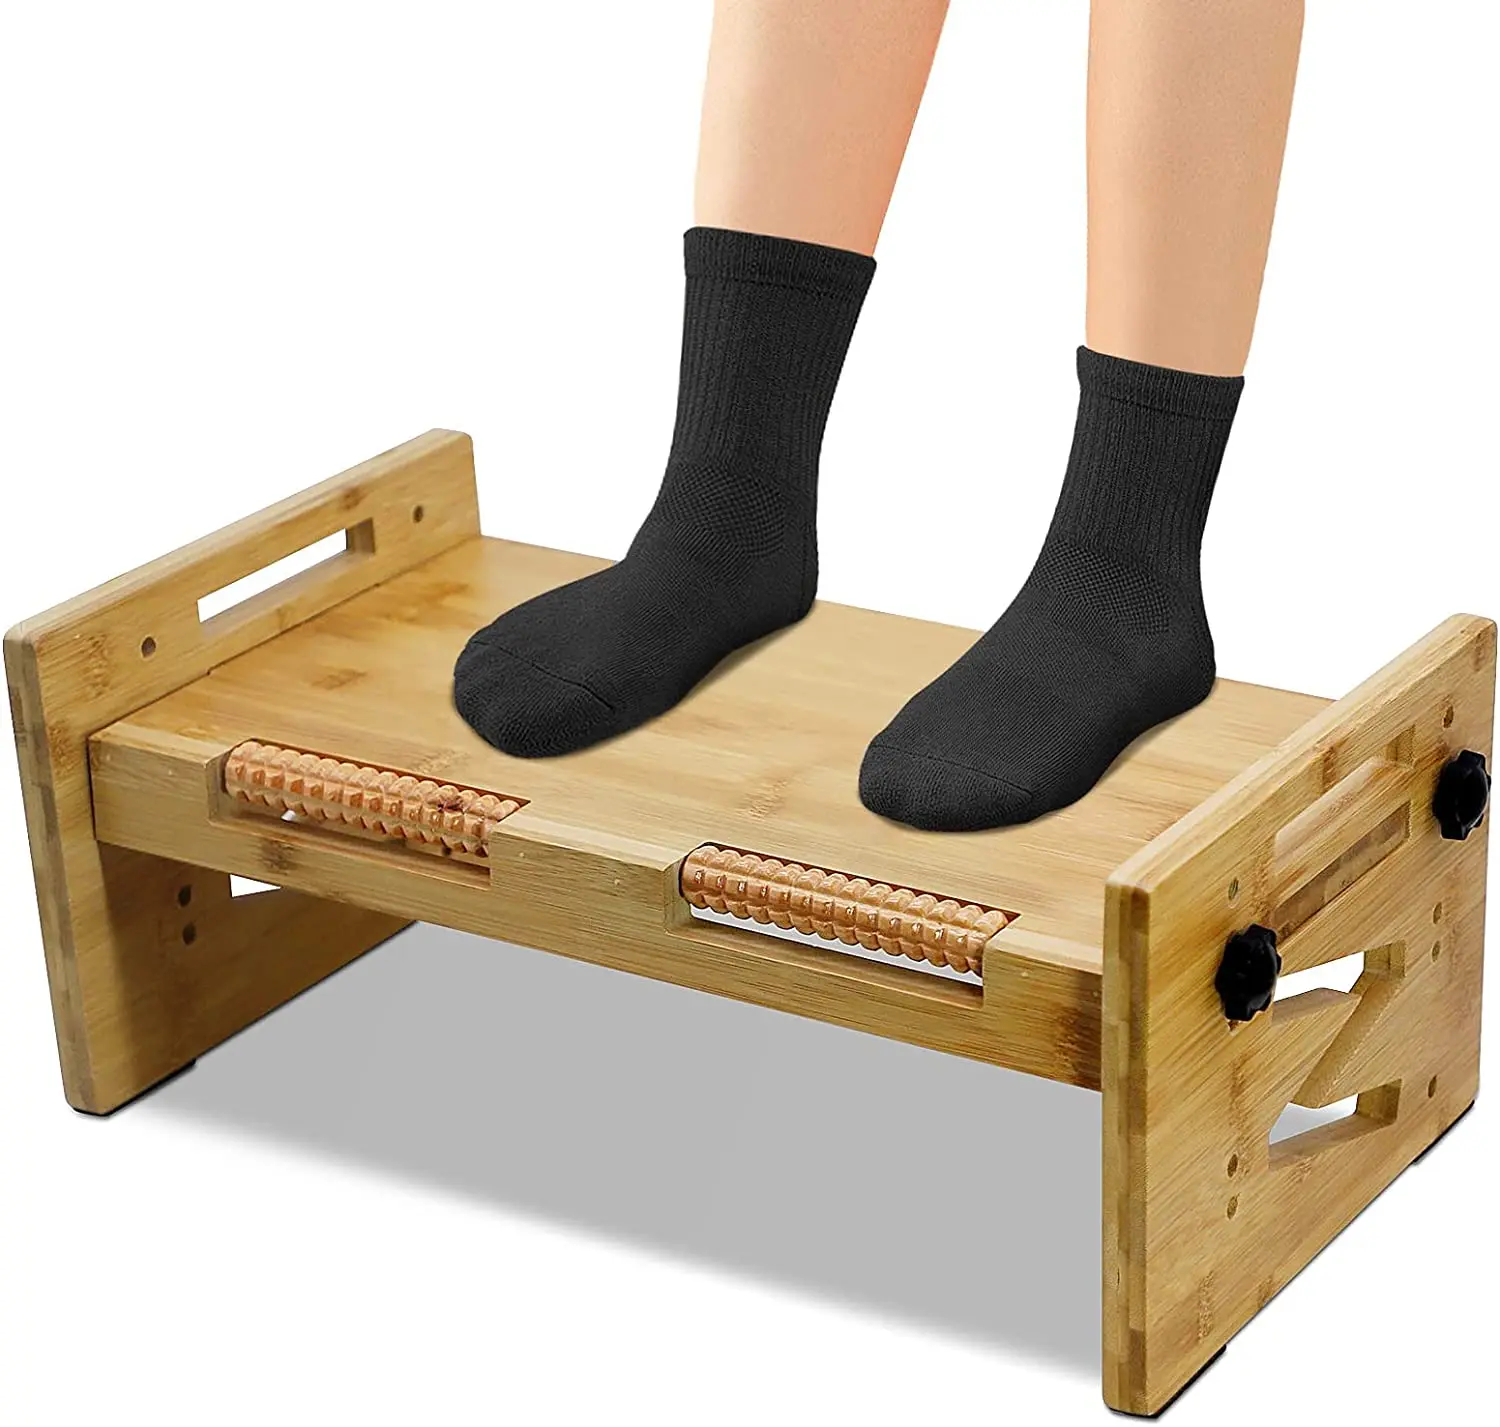 1pc Footrest Massager For Under Desk Use, Ergonomic Foot Rest With